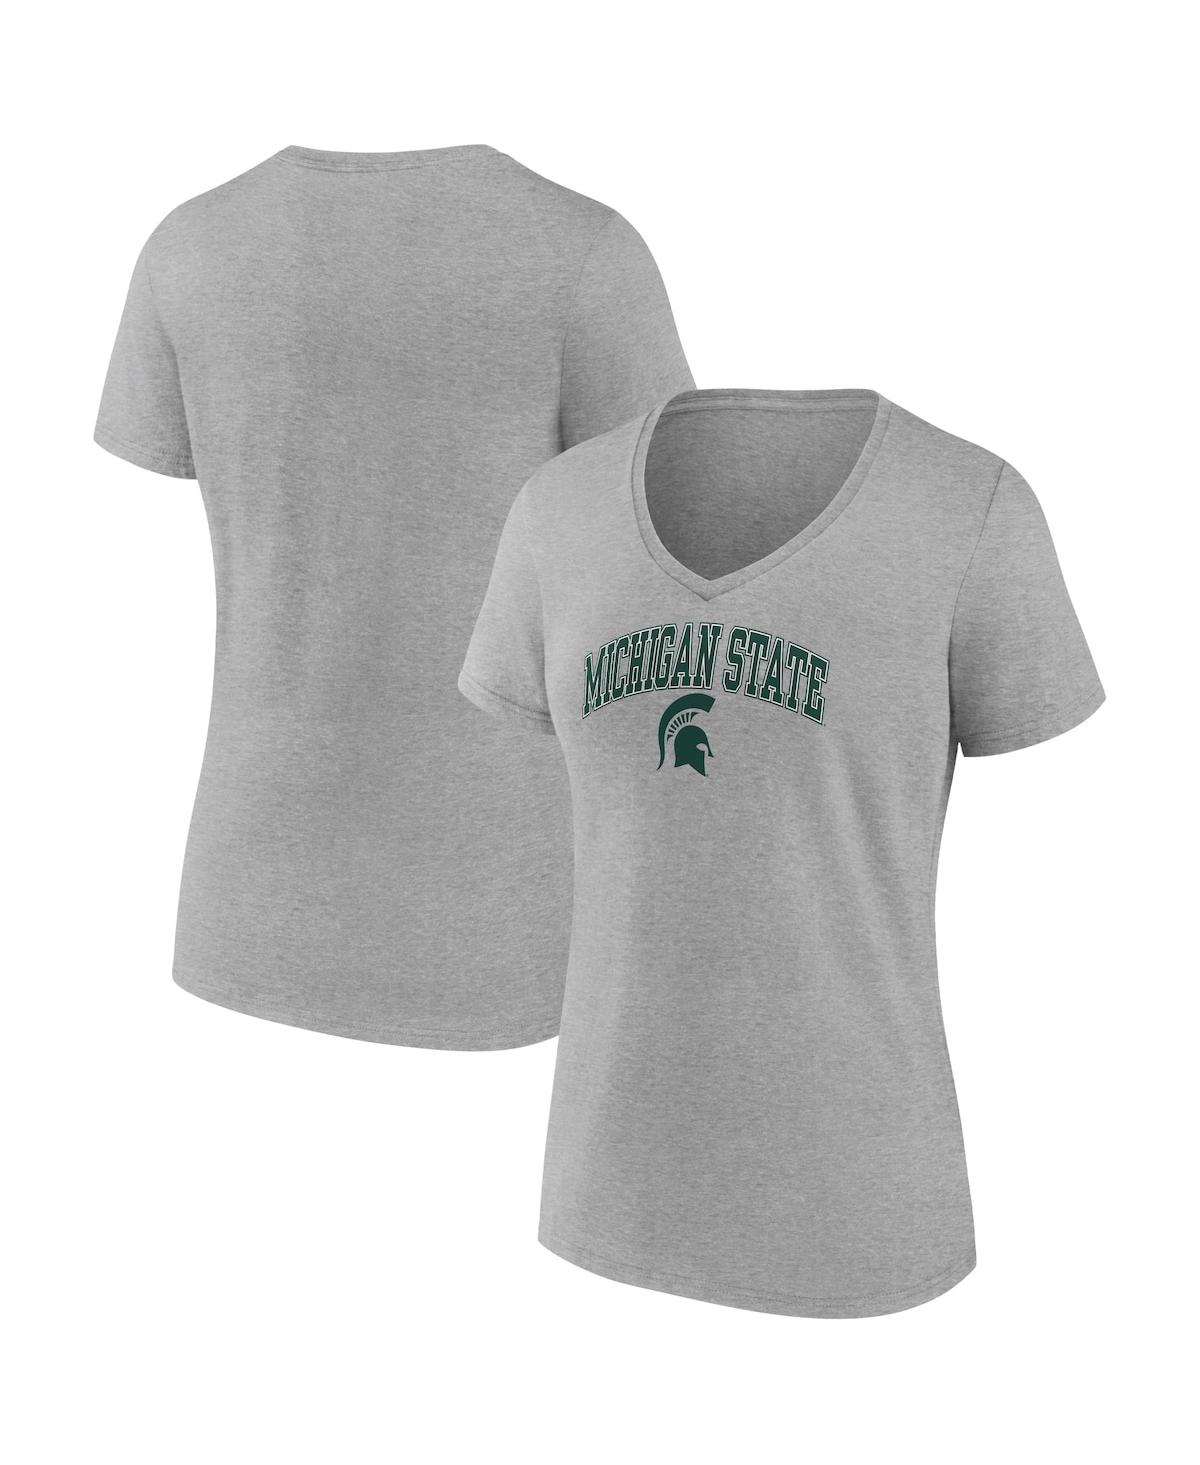 Women's Fanatics Heather Gray Michigan State Spartans Evergreen Campus V-Neck T-shirt - Heather Gray